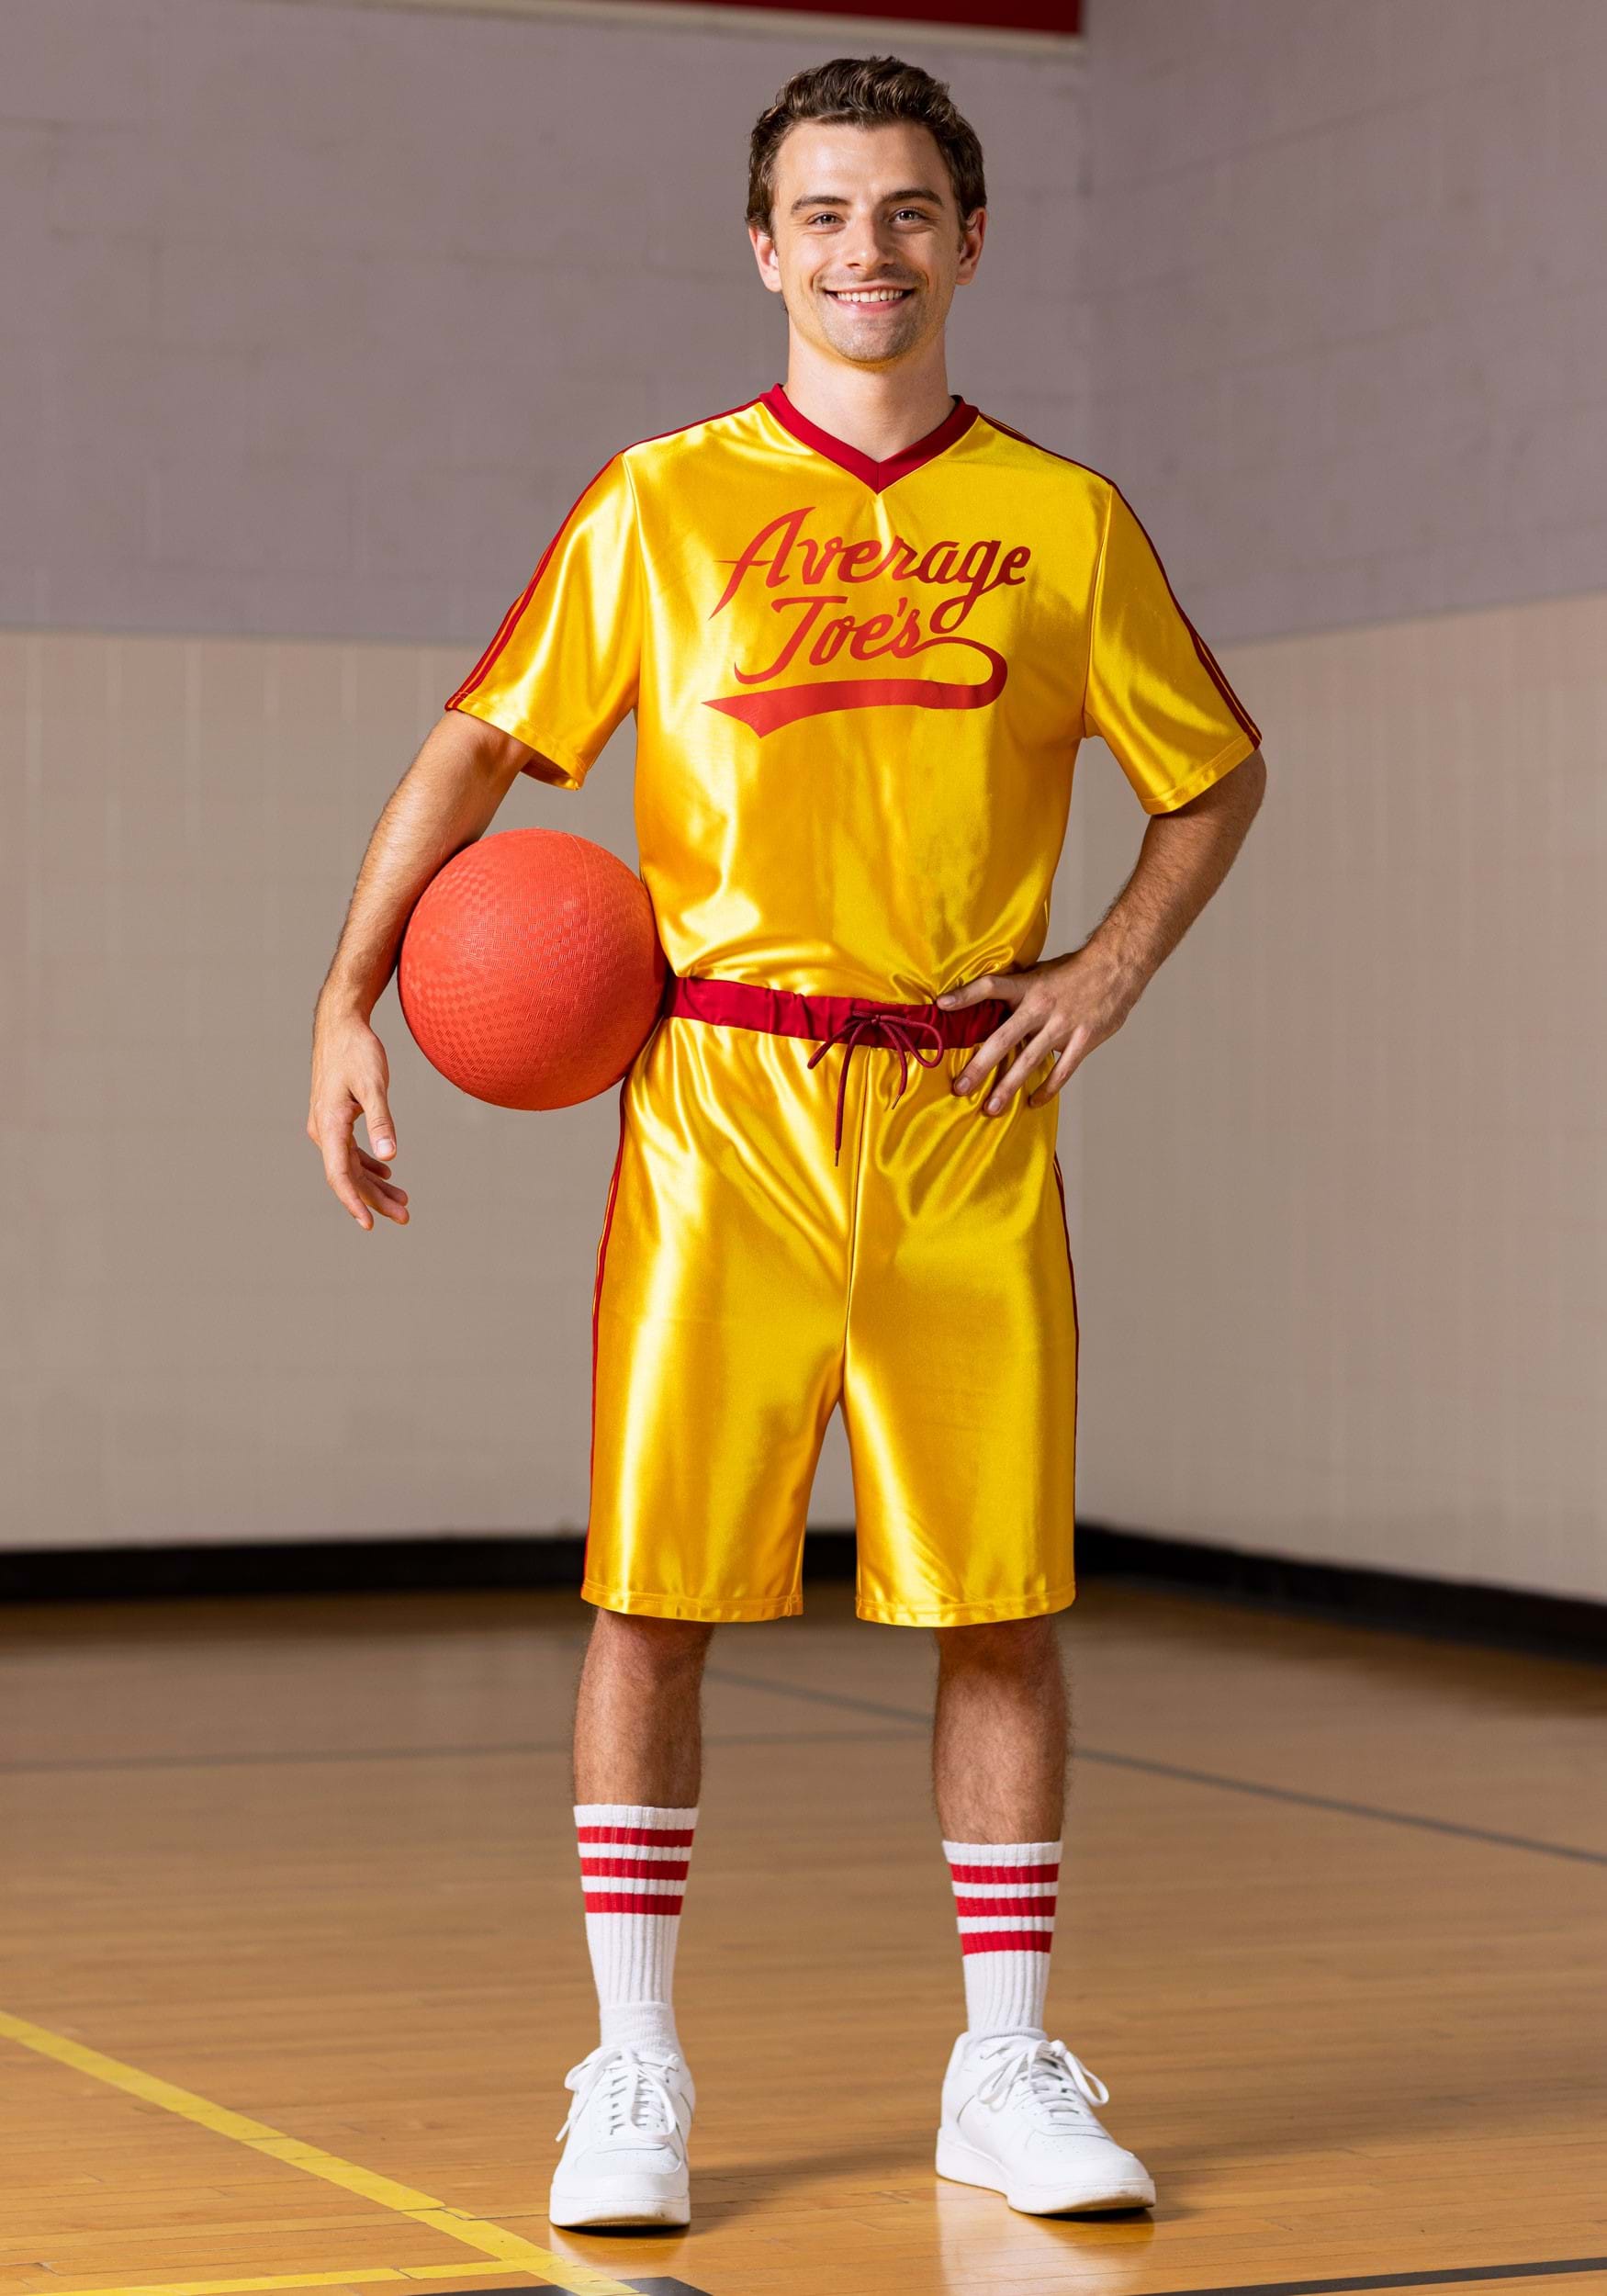 Dodgeball Adult Average Joe's Costume